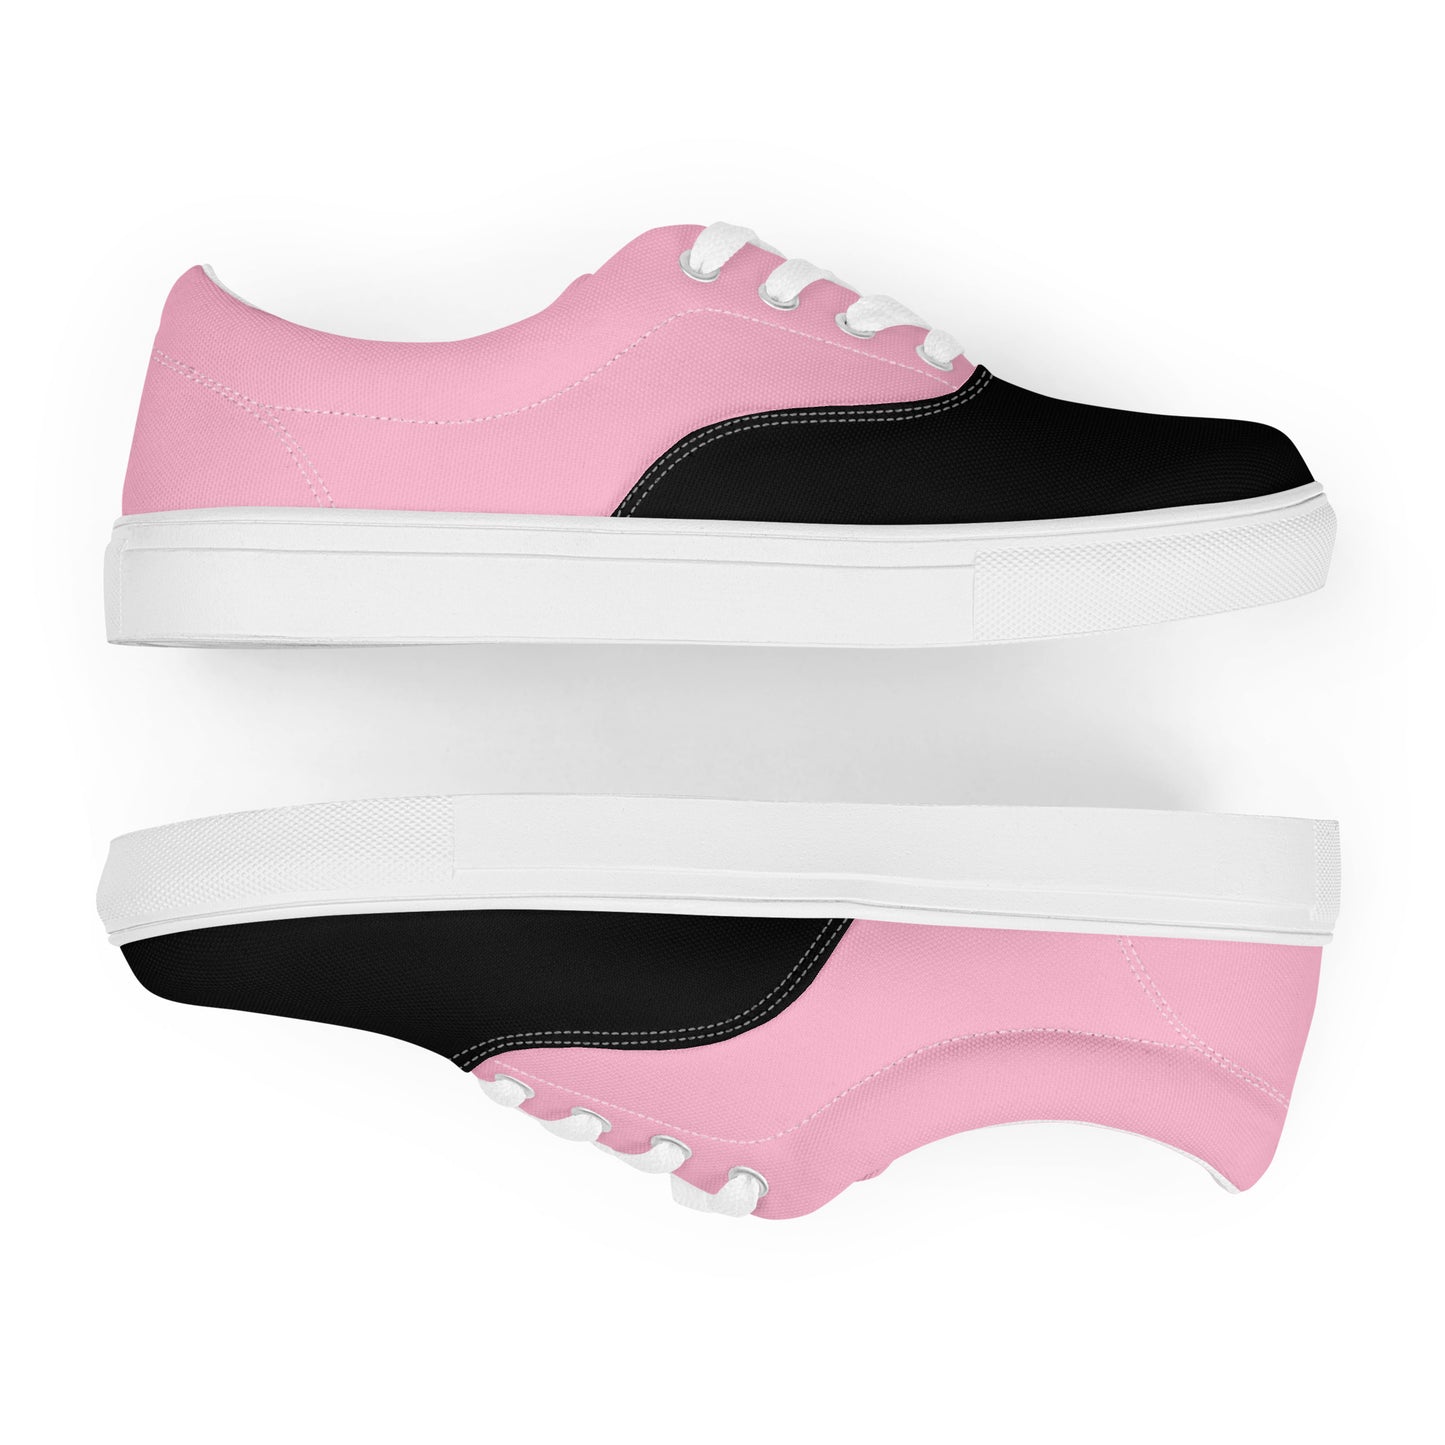 Black on Pink 954 Signature Men’s lace-up canvas shoes